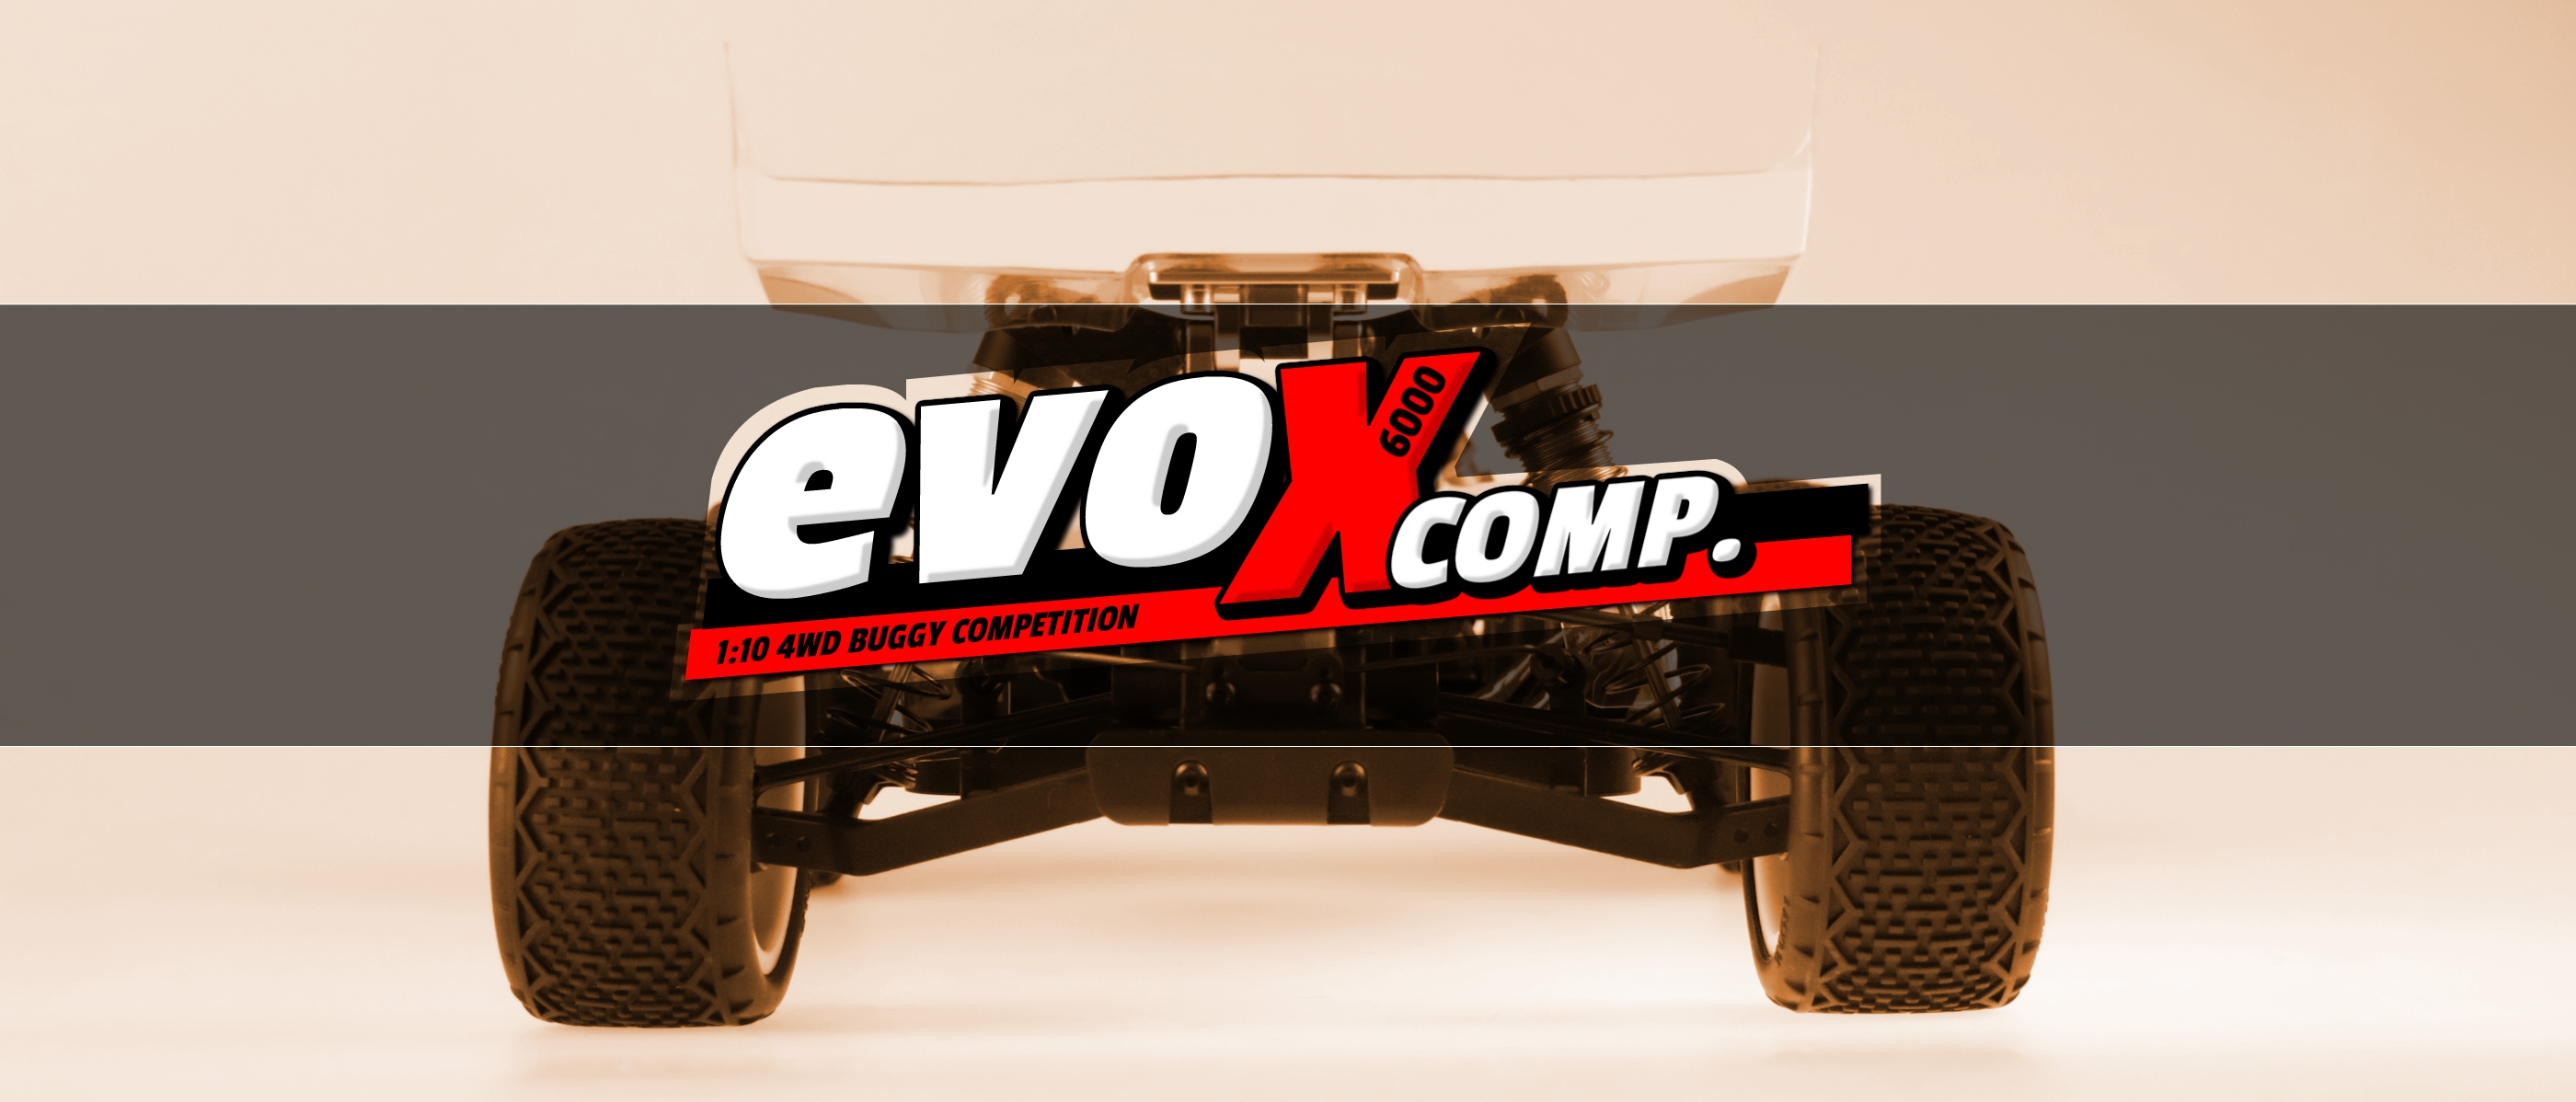 evoX6000 competition Buggy von Amewi